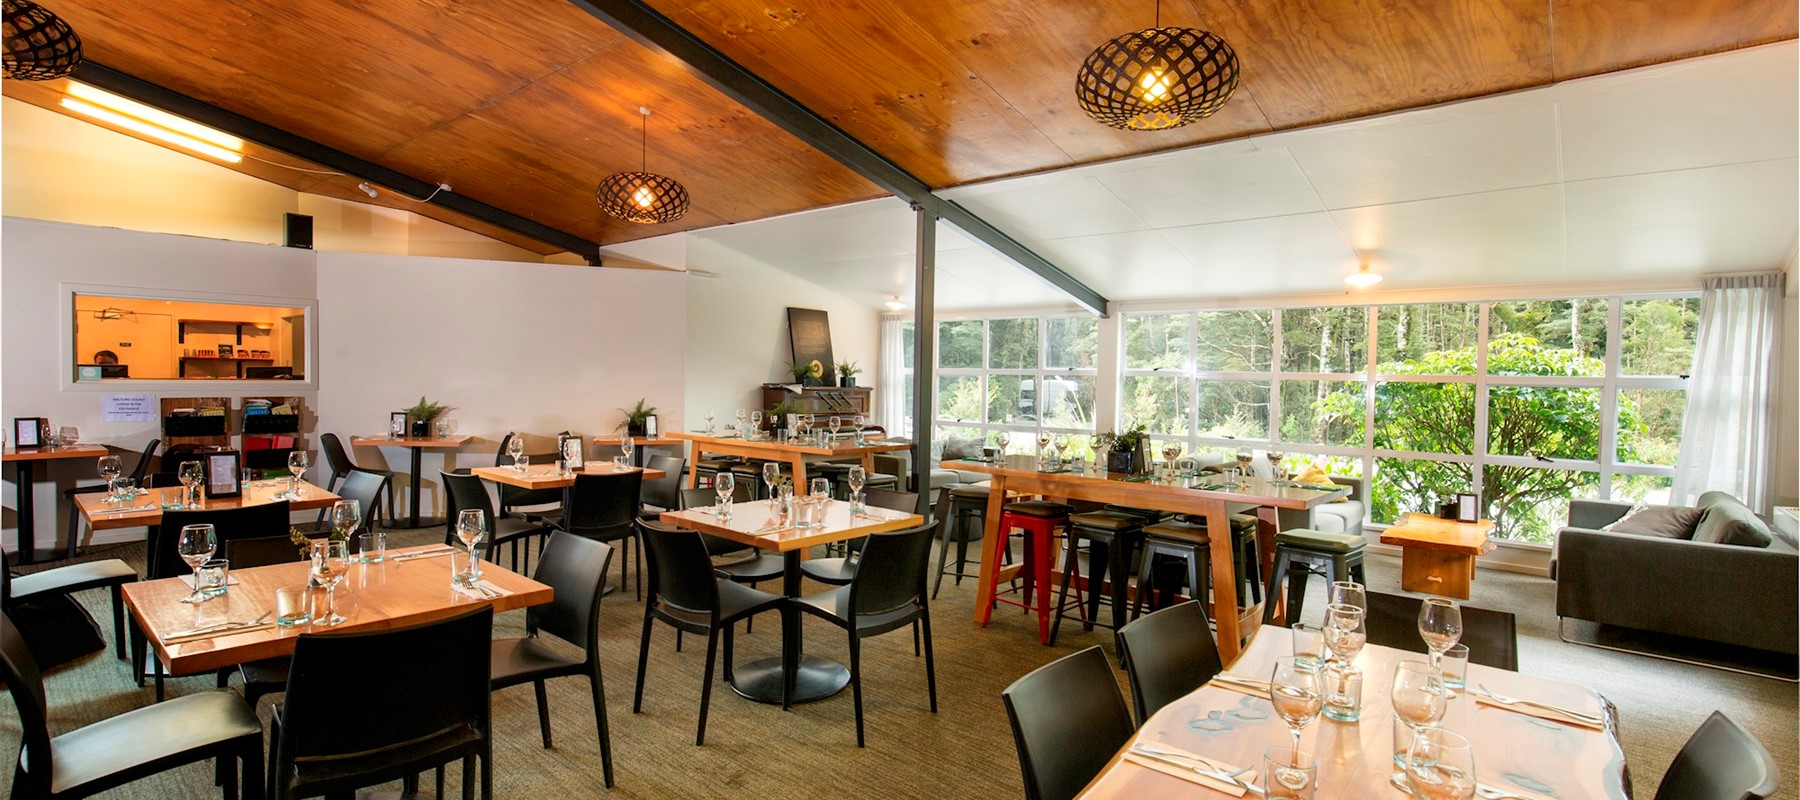 Milford Sound Lodge - Pio Pio Restaurant Dining Room 